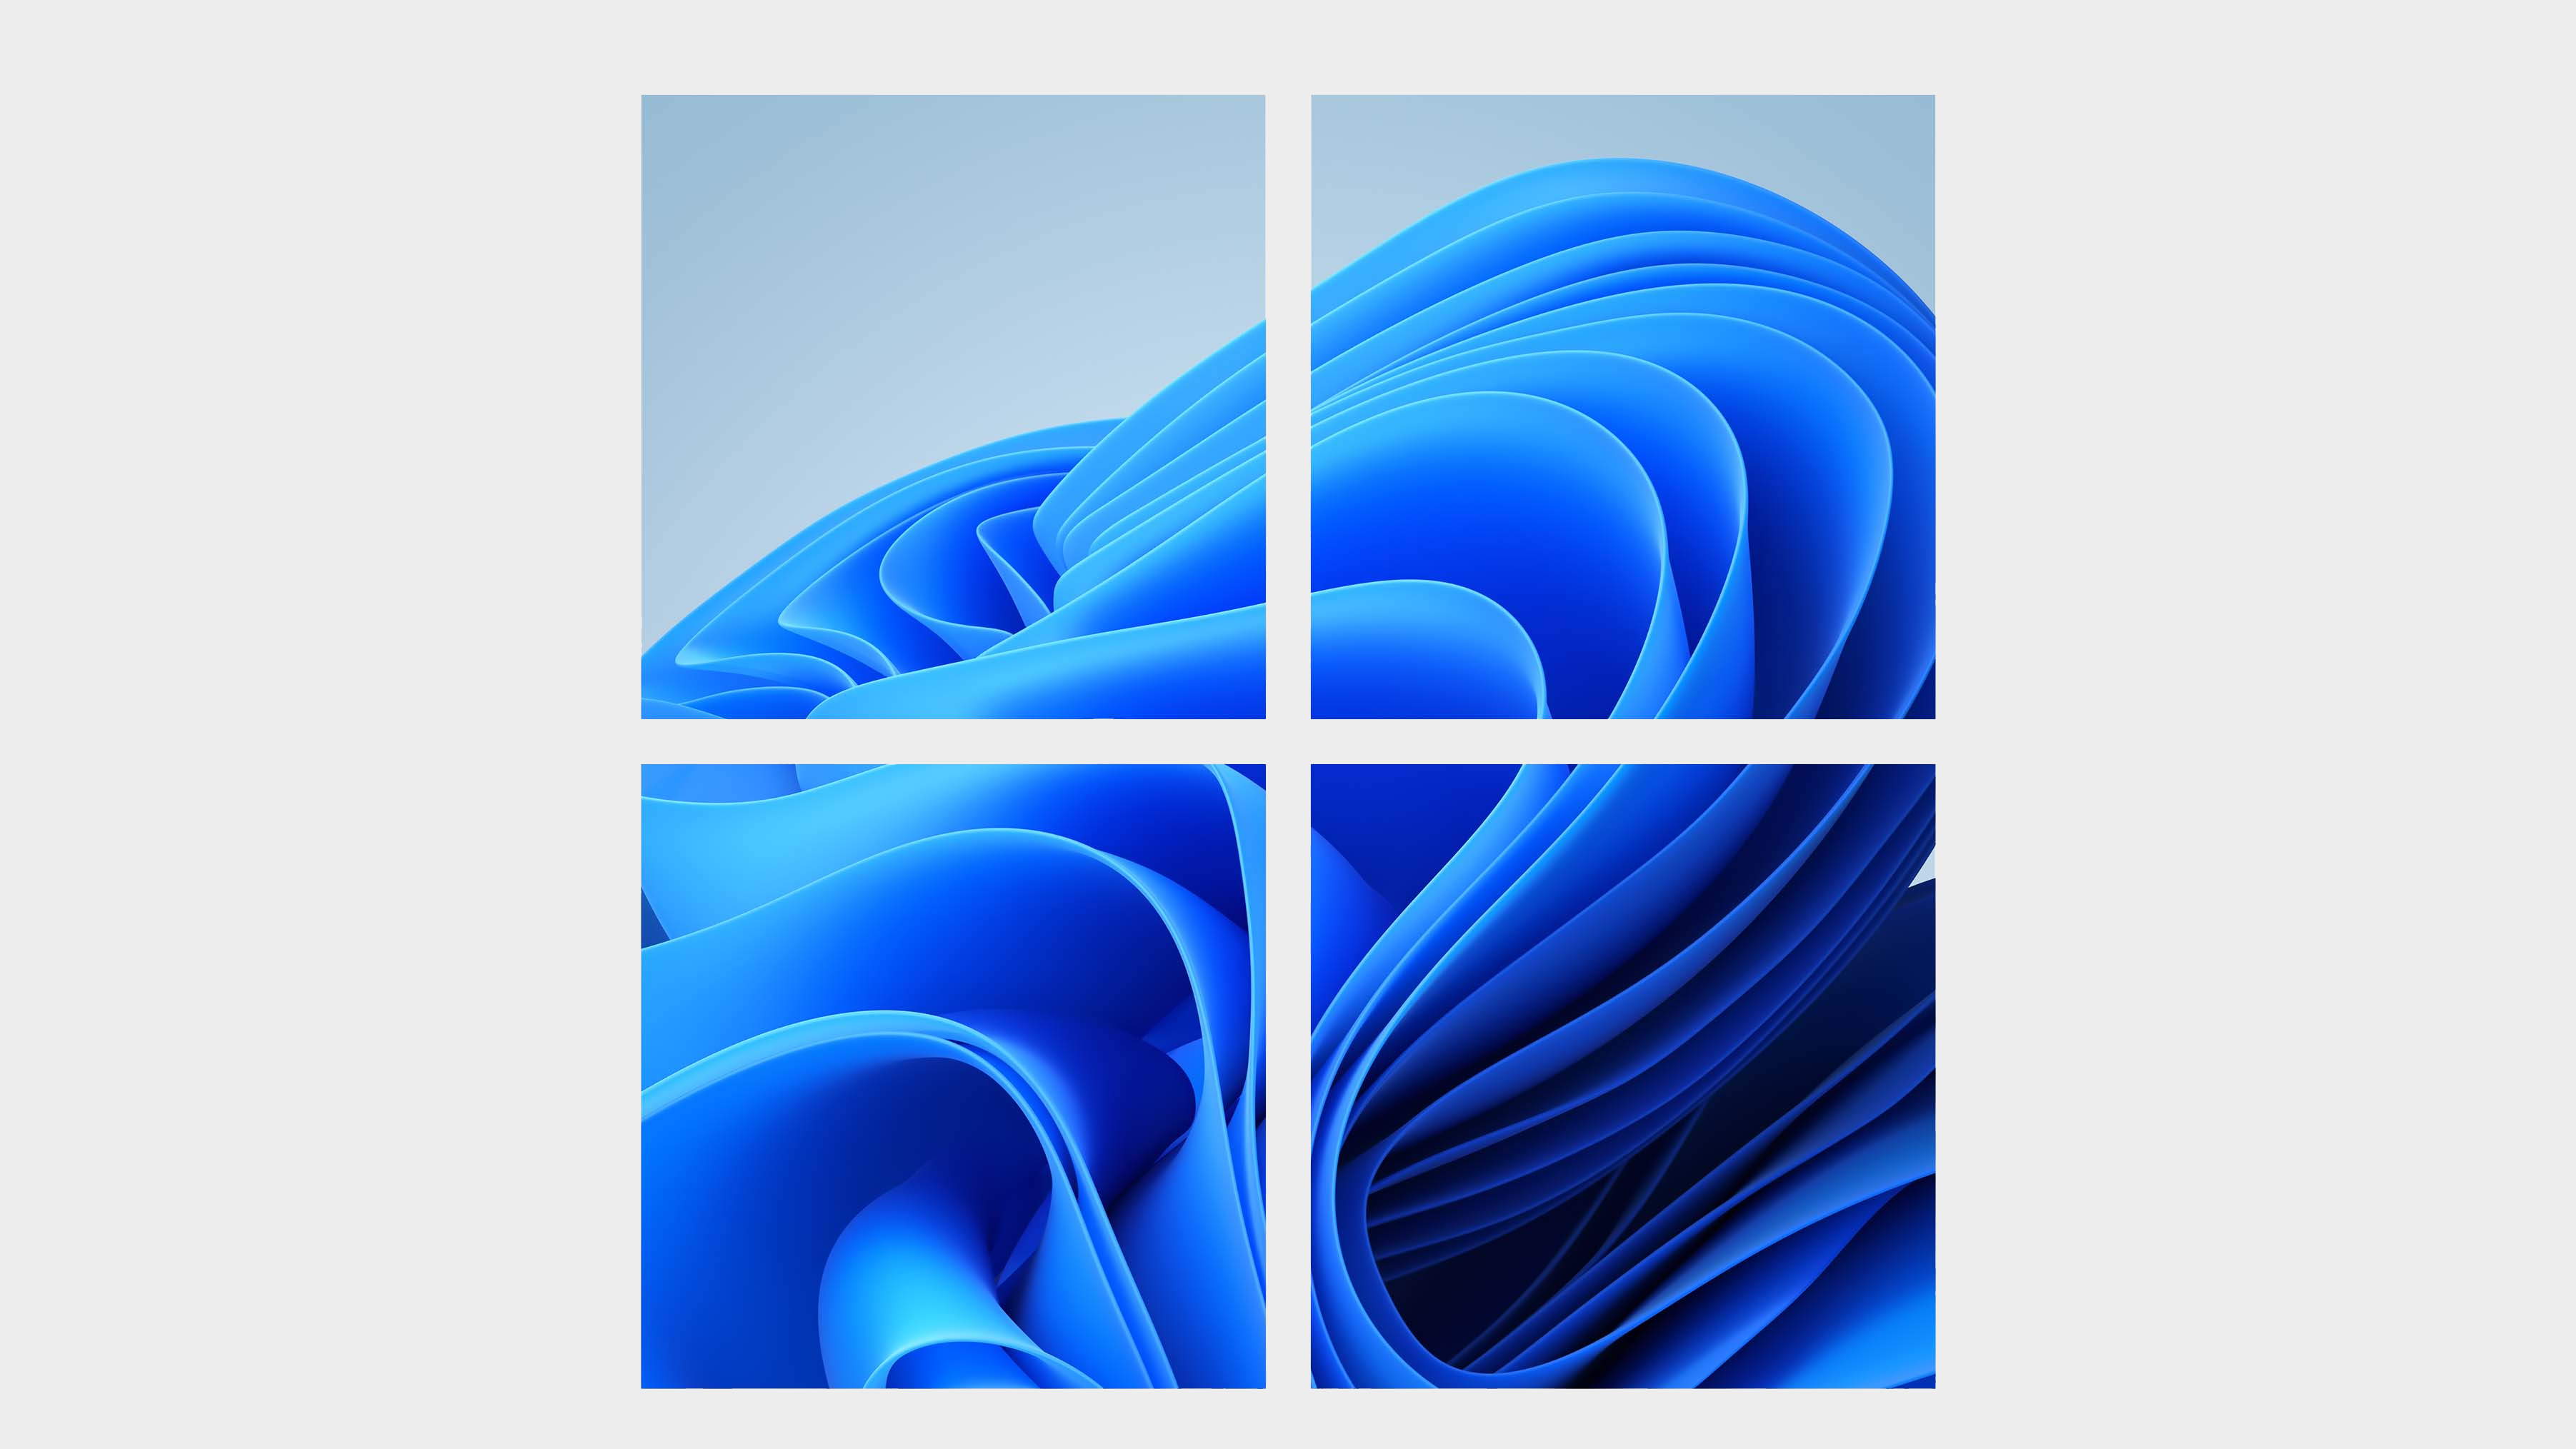 Kwadratowe logo Windows 11